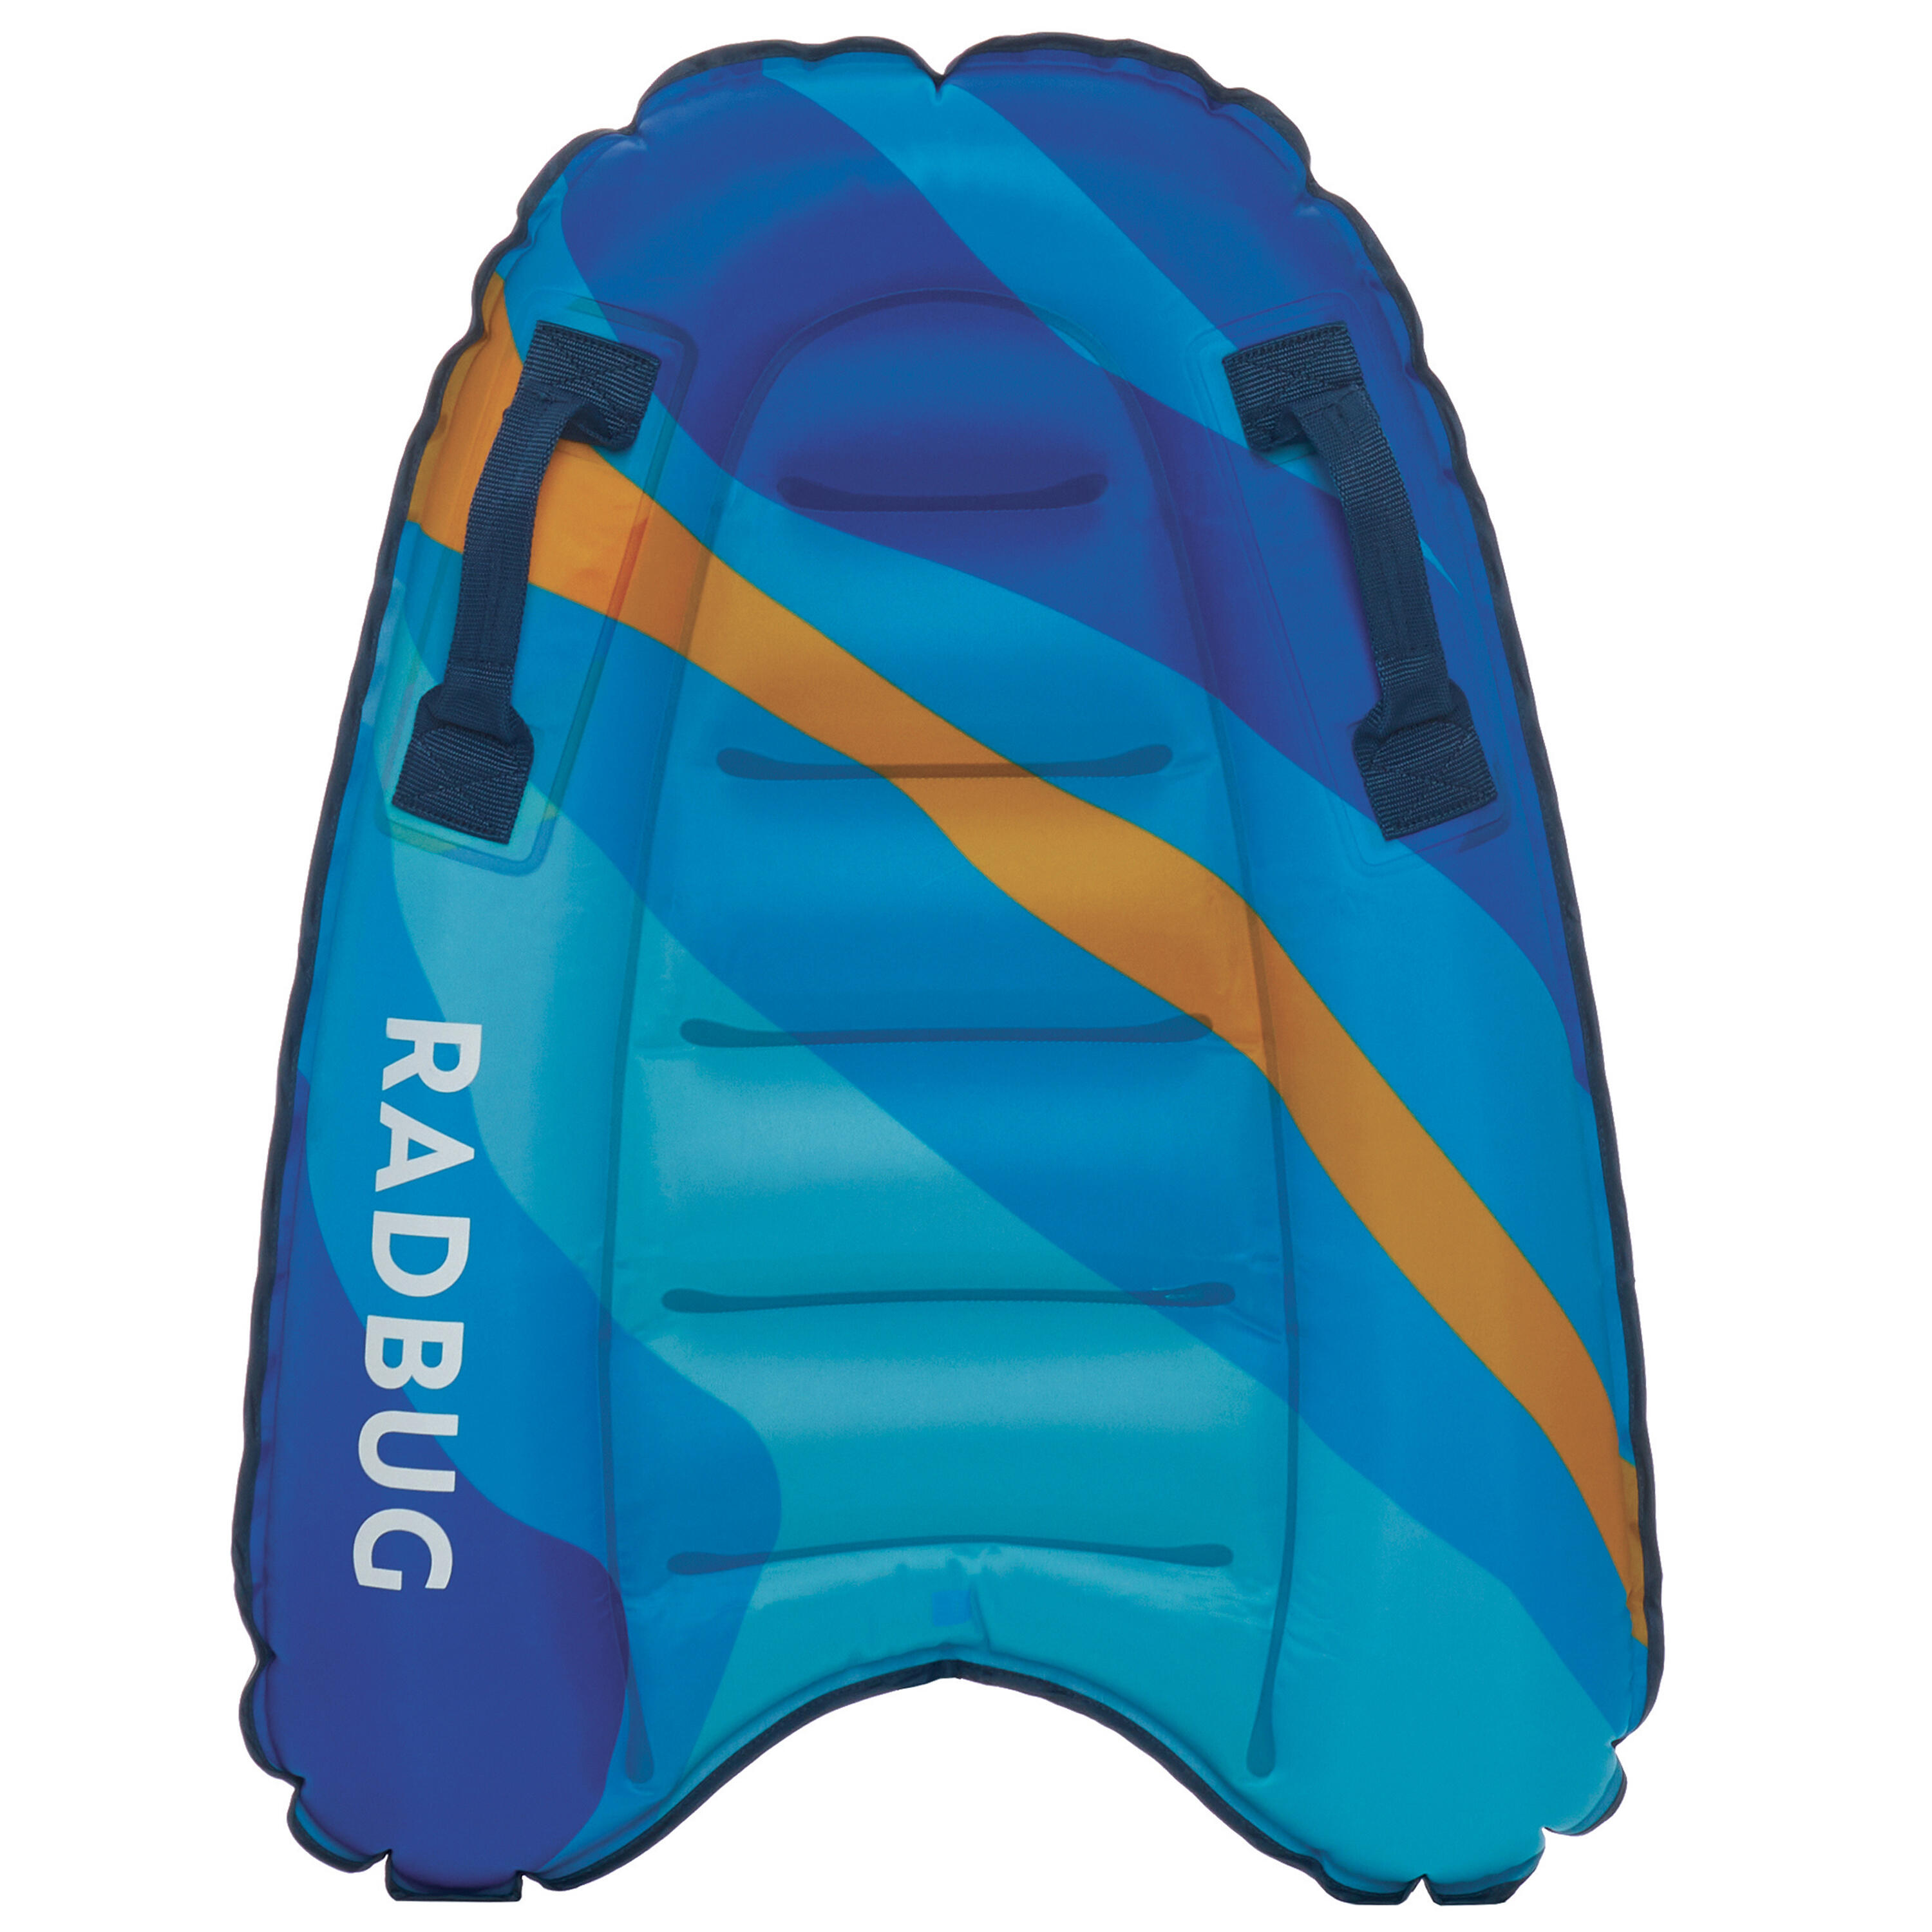 Bodyboard gonflabilă DISCOVERY Albastru-Galben Copii 4-8 ani (15-25 kg) decathlon.ro